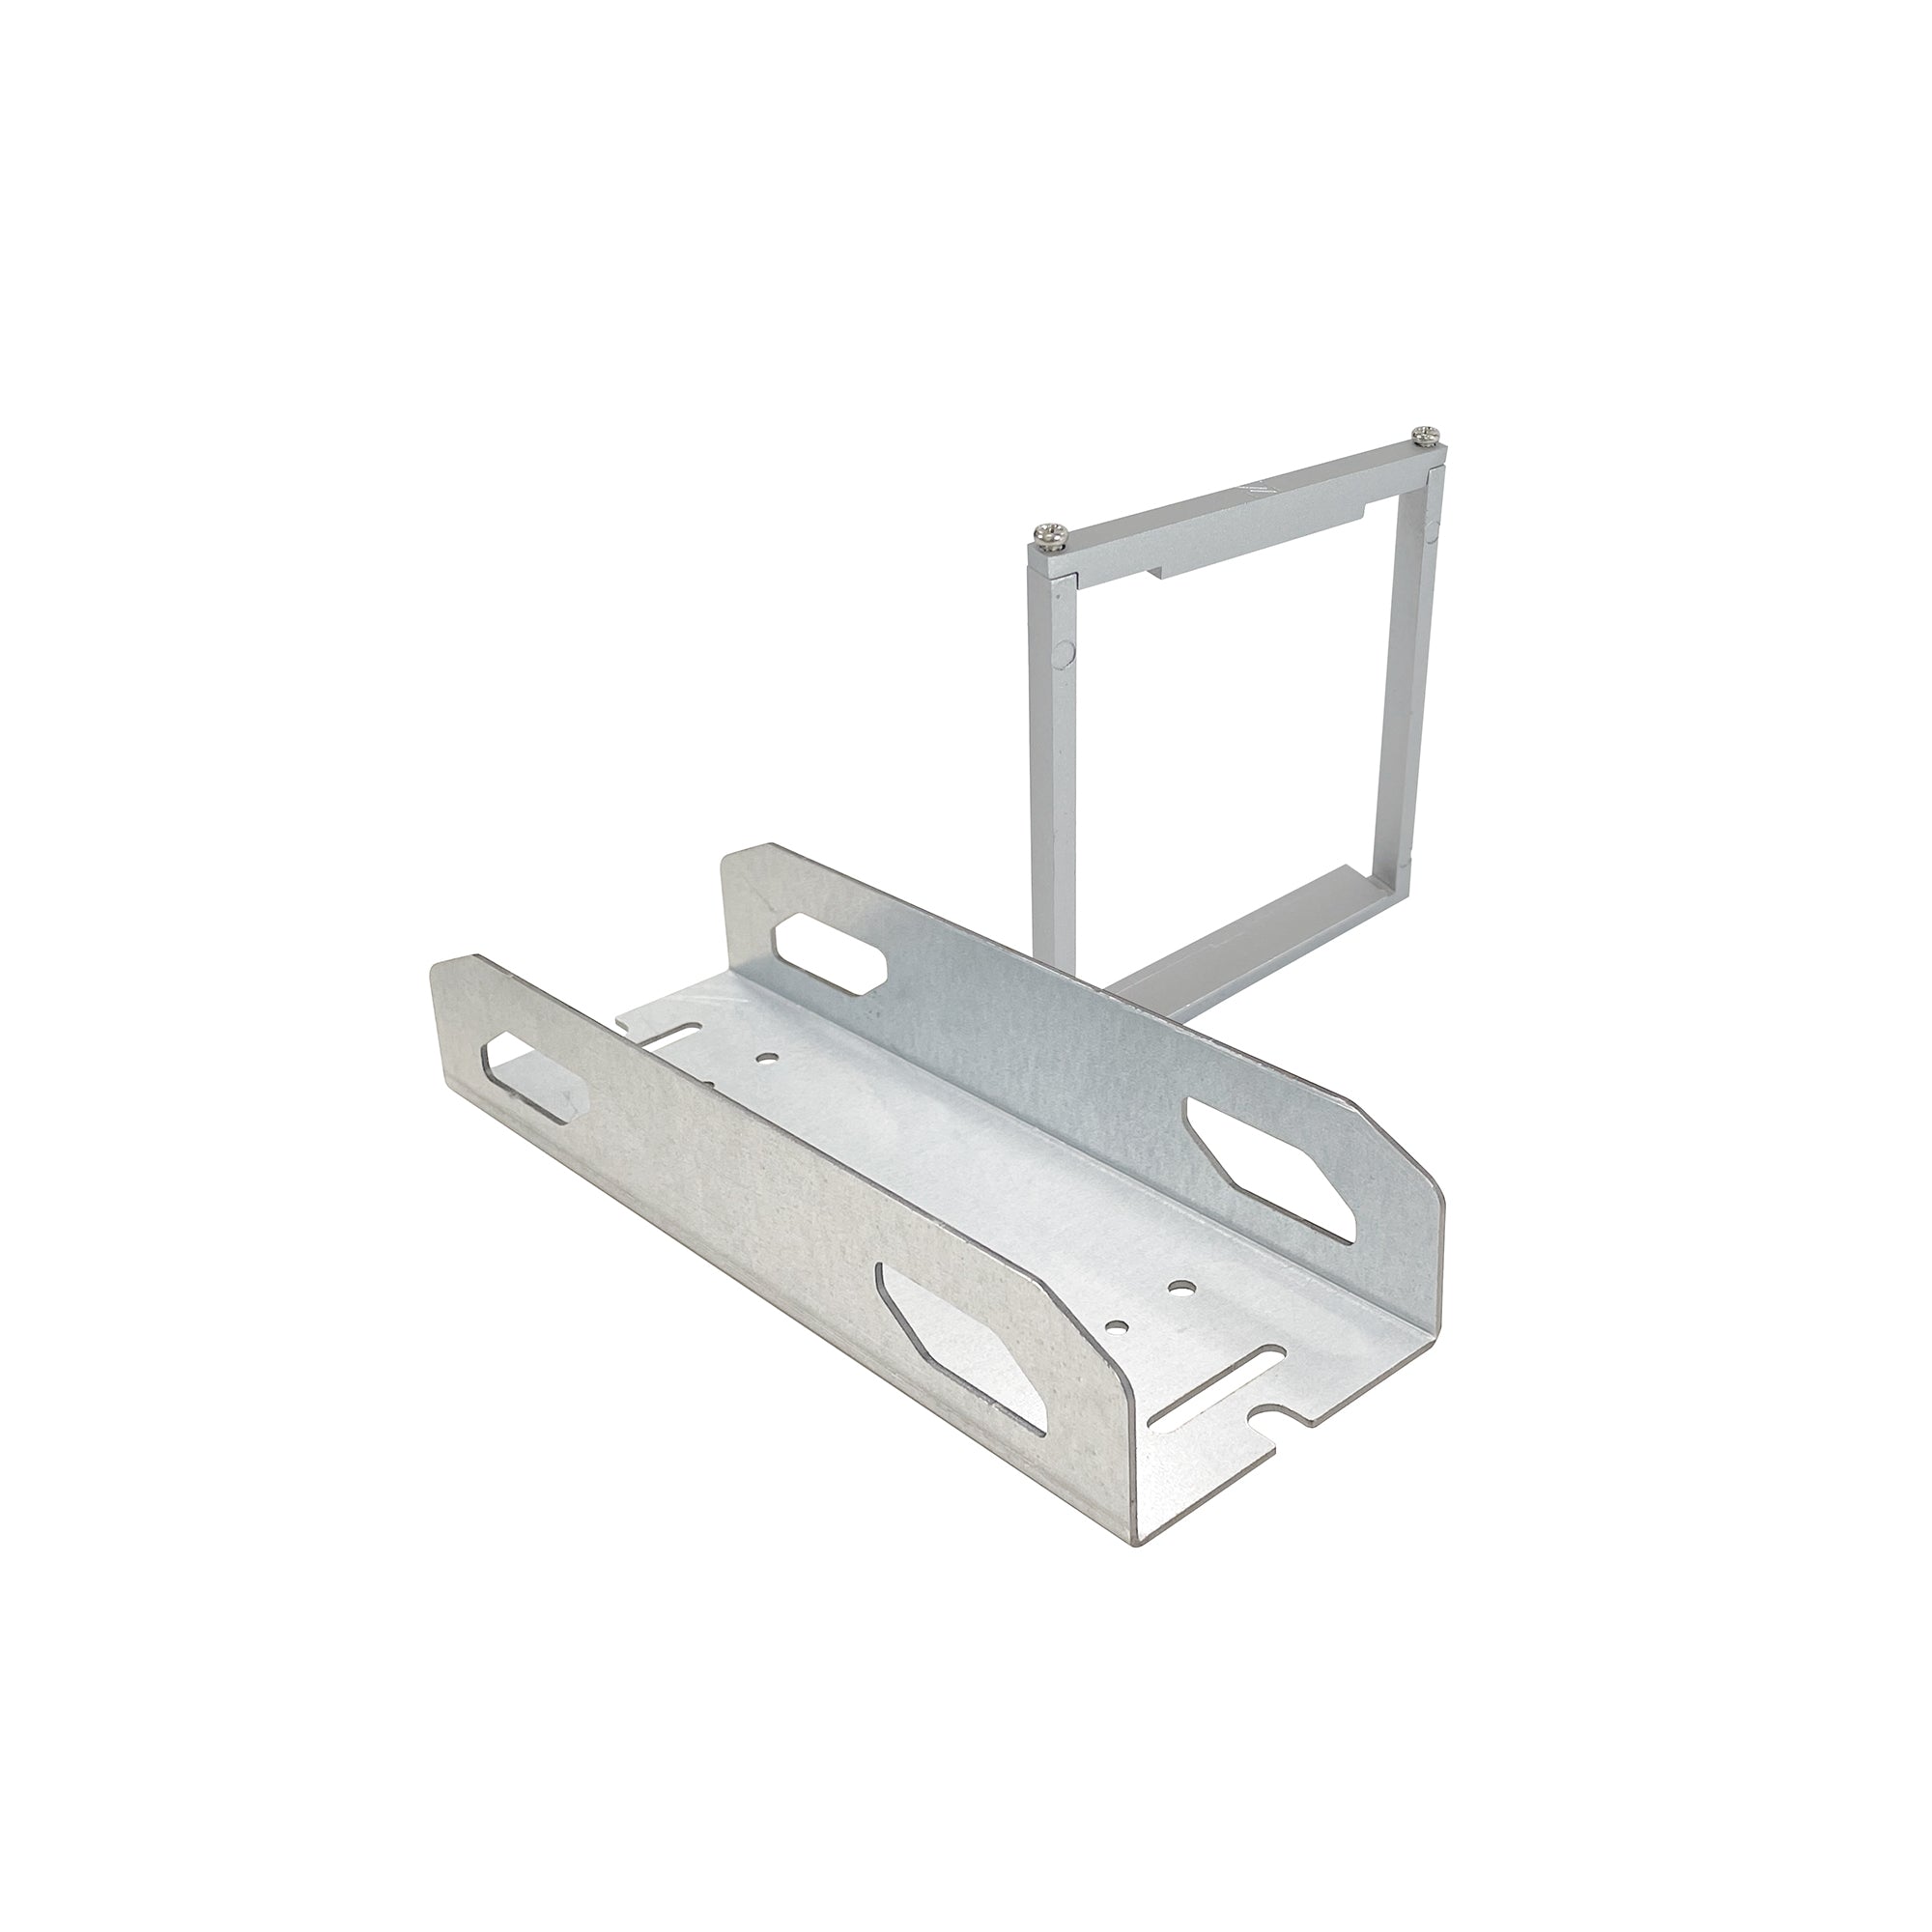 Nora Lighting NLUD-PMCA - Linear - Daisy Chain Bracket for NLUD (pendant mount), Aluminum Finish